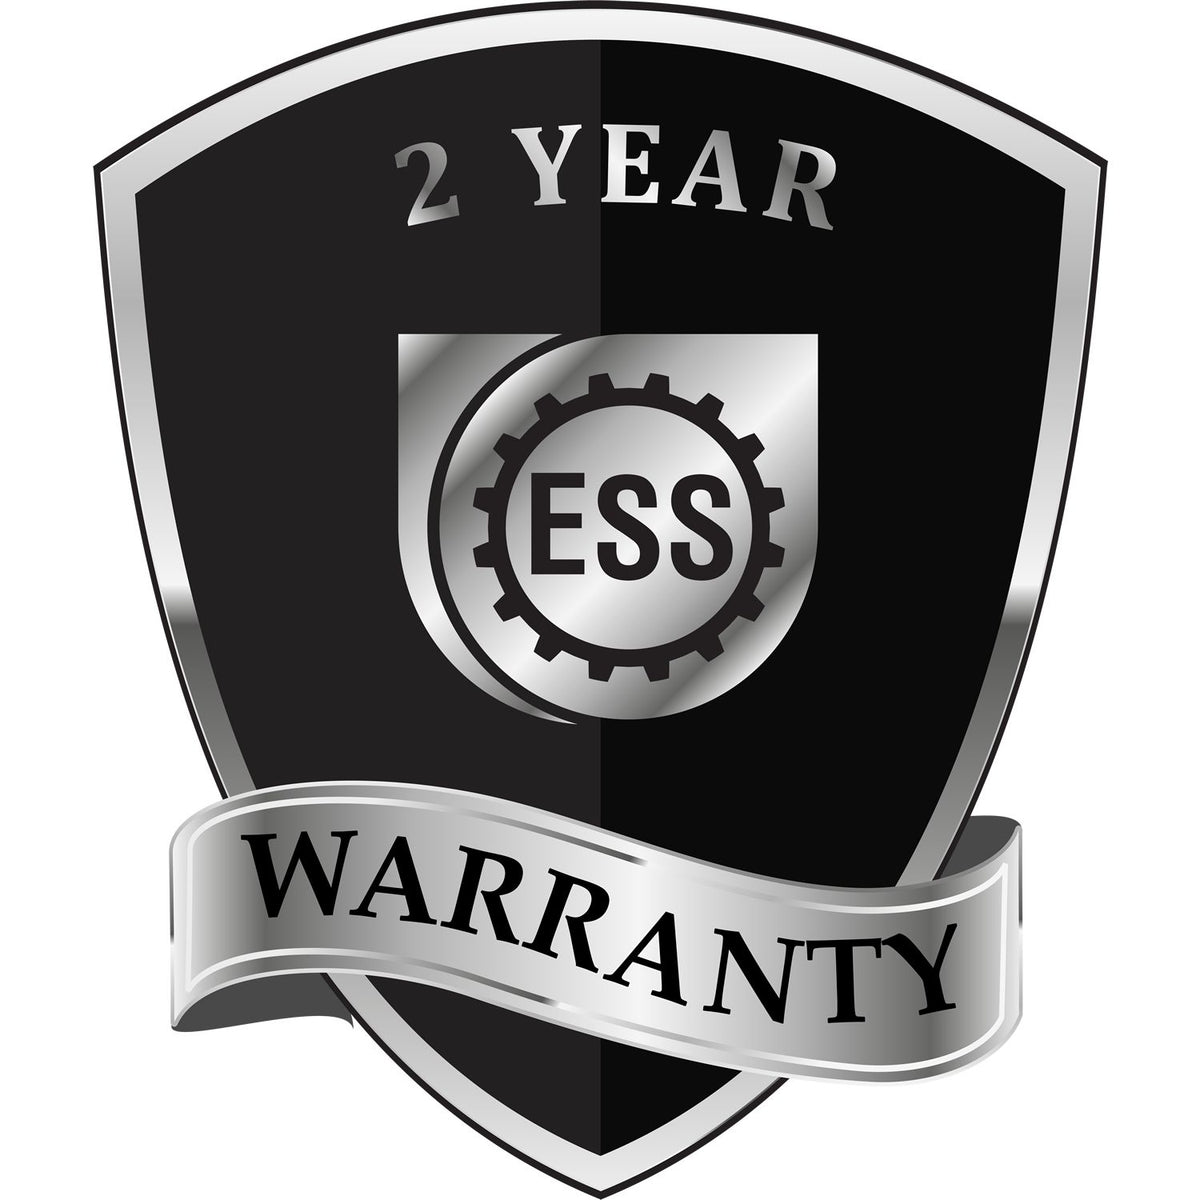 A black and silver badge or emblem showing warranty information for the Hybrid Washington Land Surveyor Seal